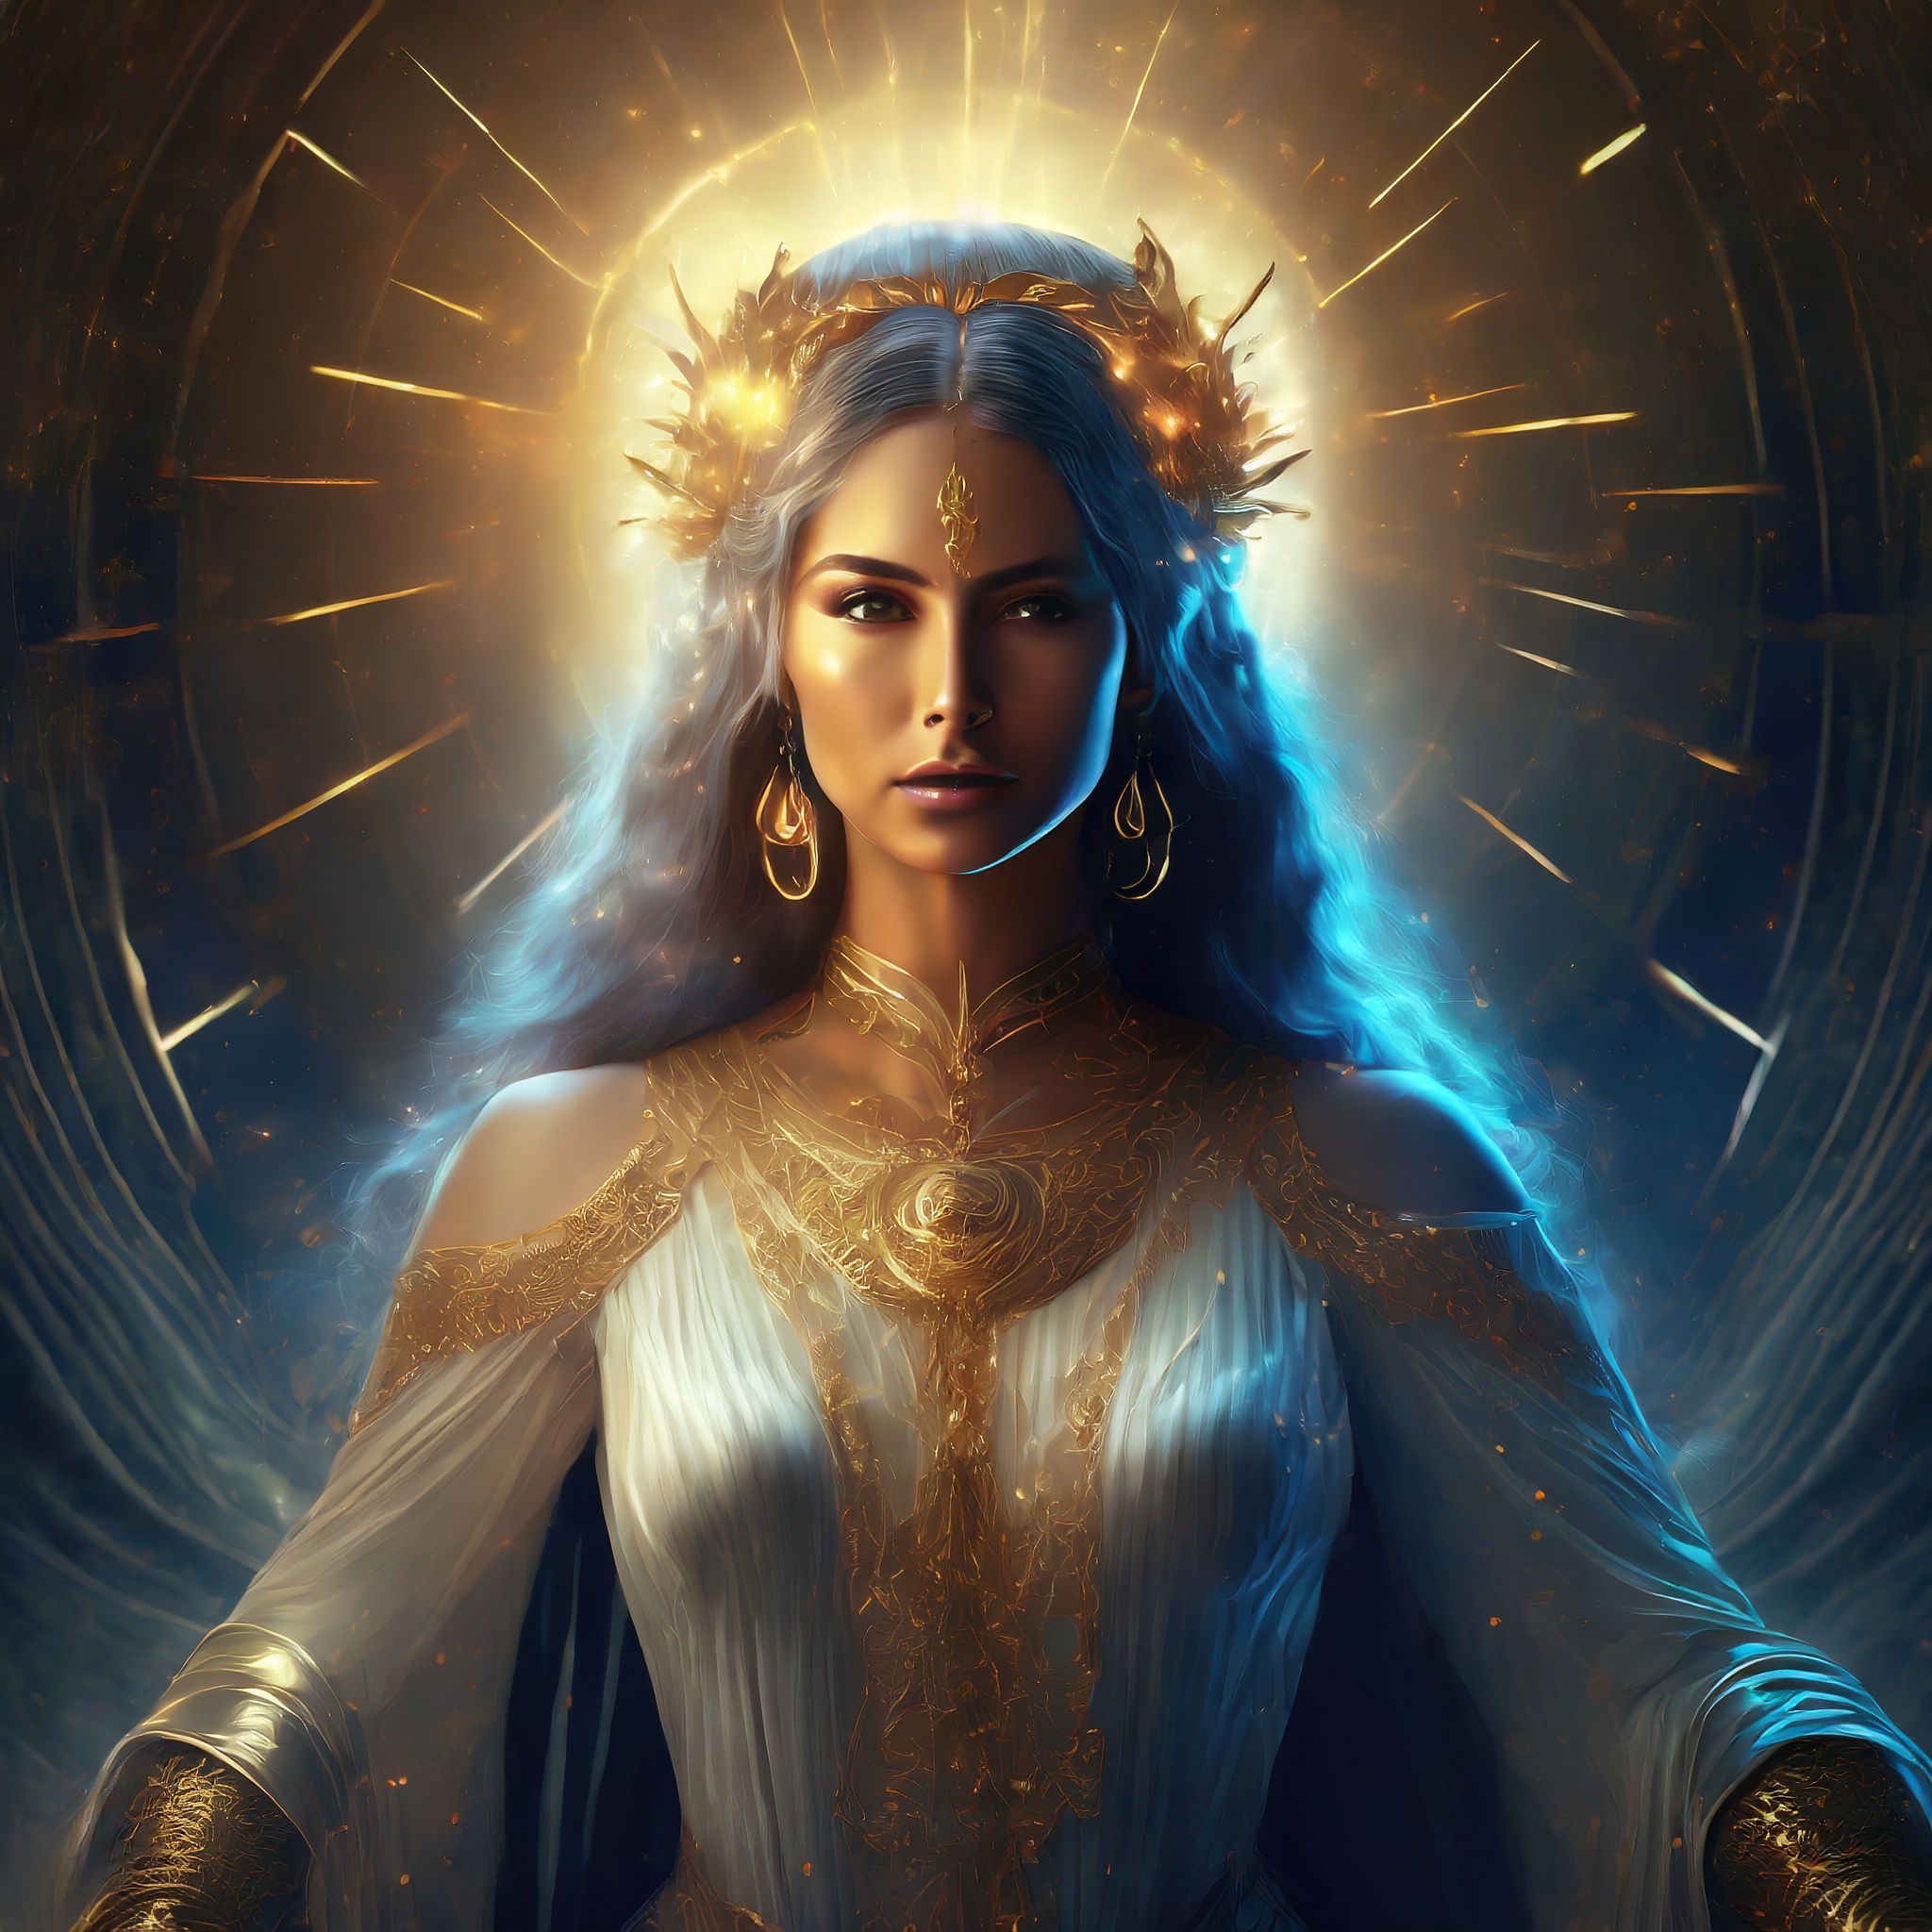 A portrait of the Goddess Hera.